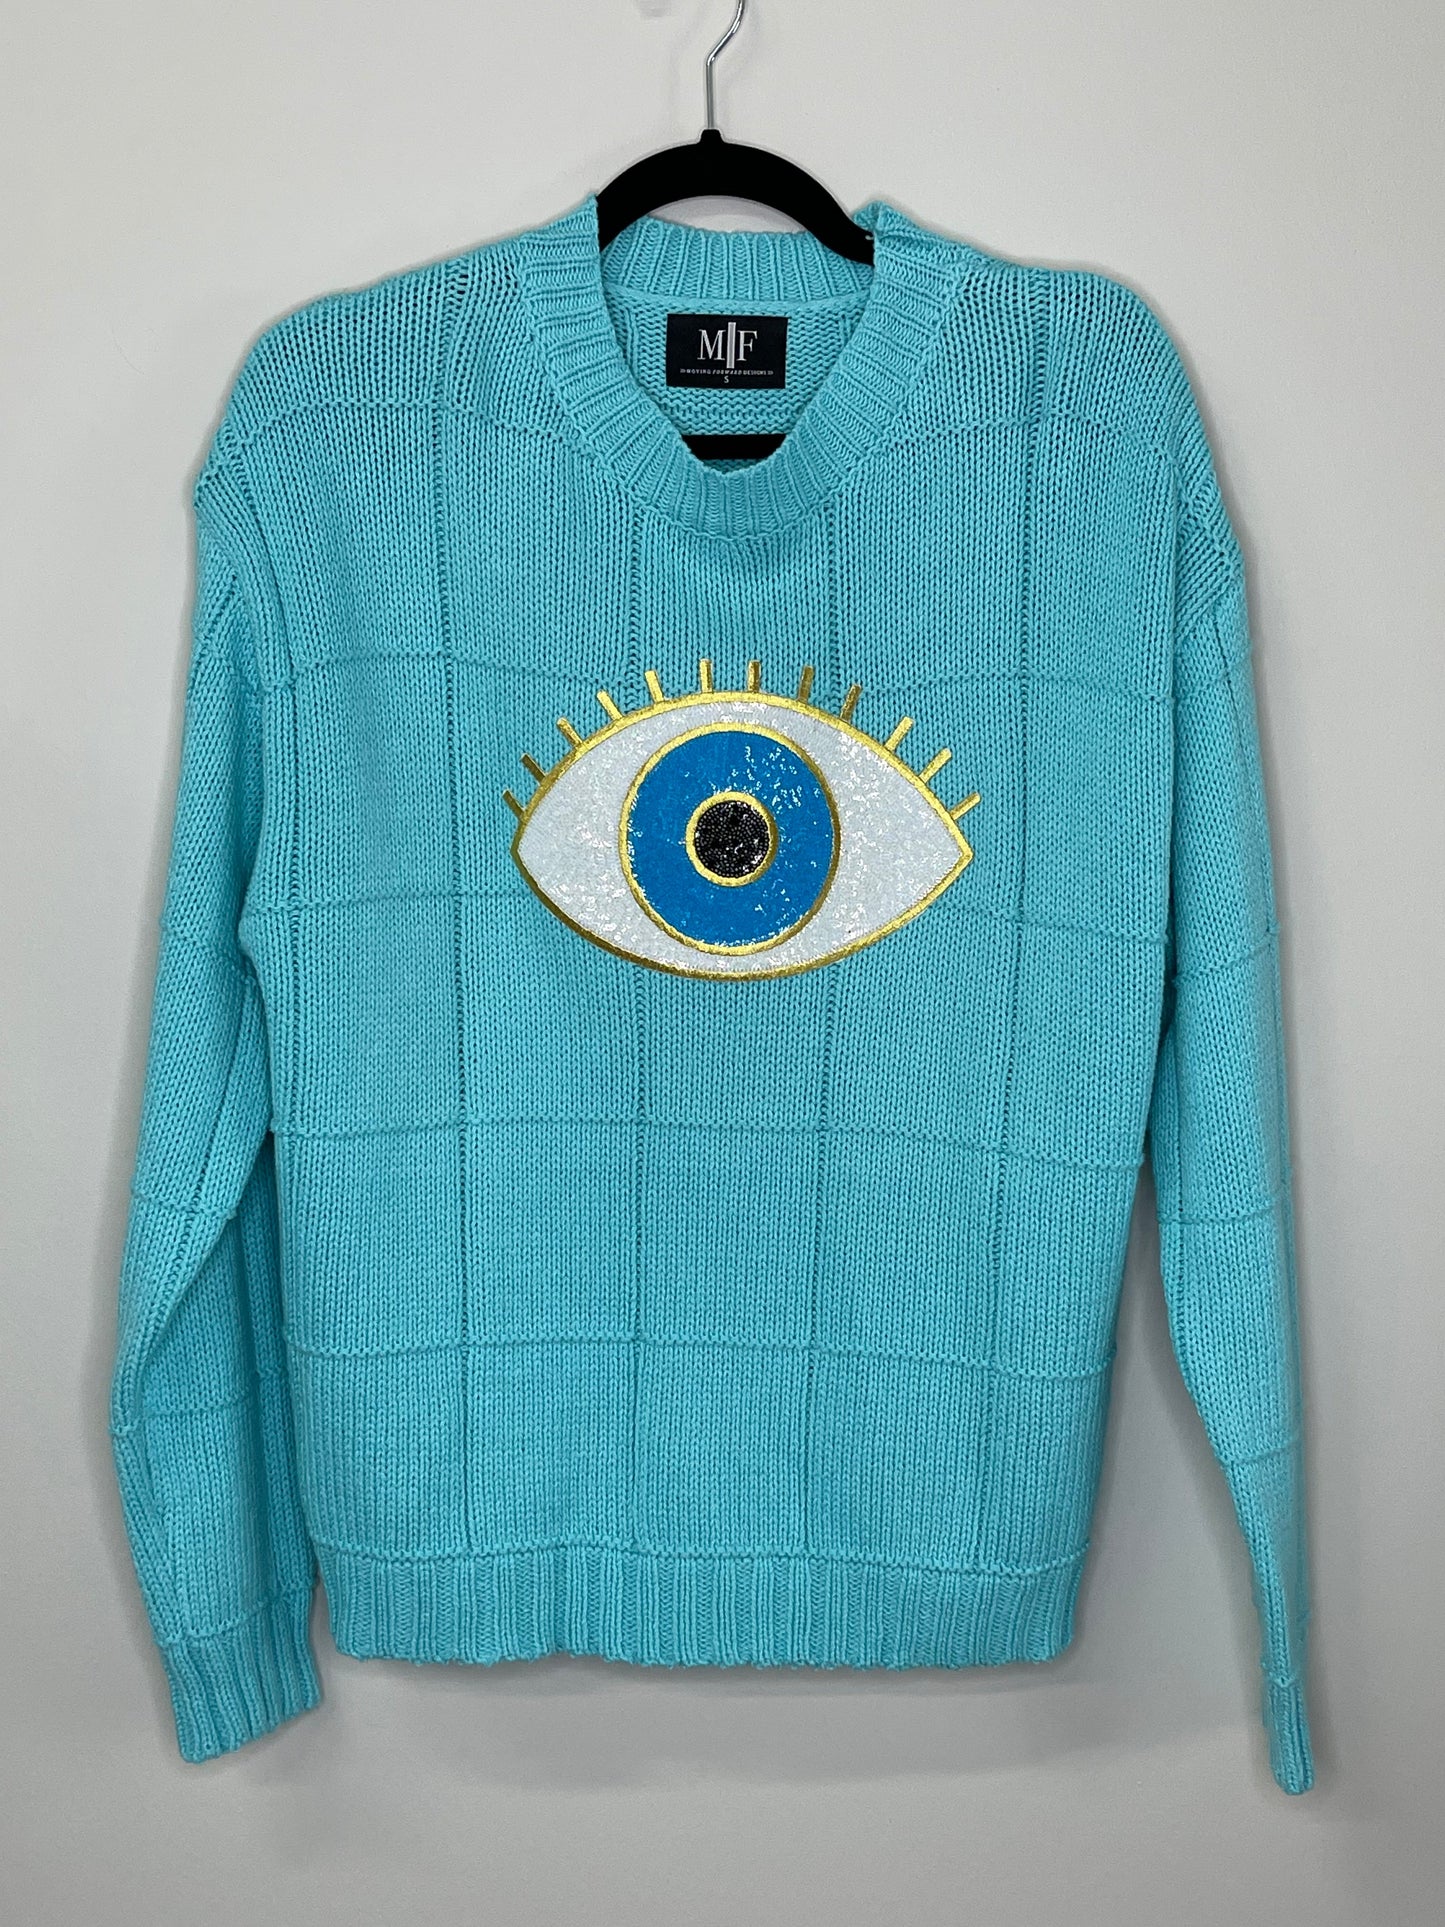 Sweater, Diamond Stitch Turquoise, Sequin Eye